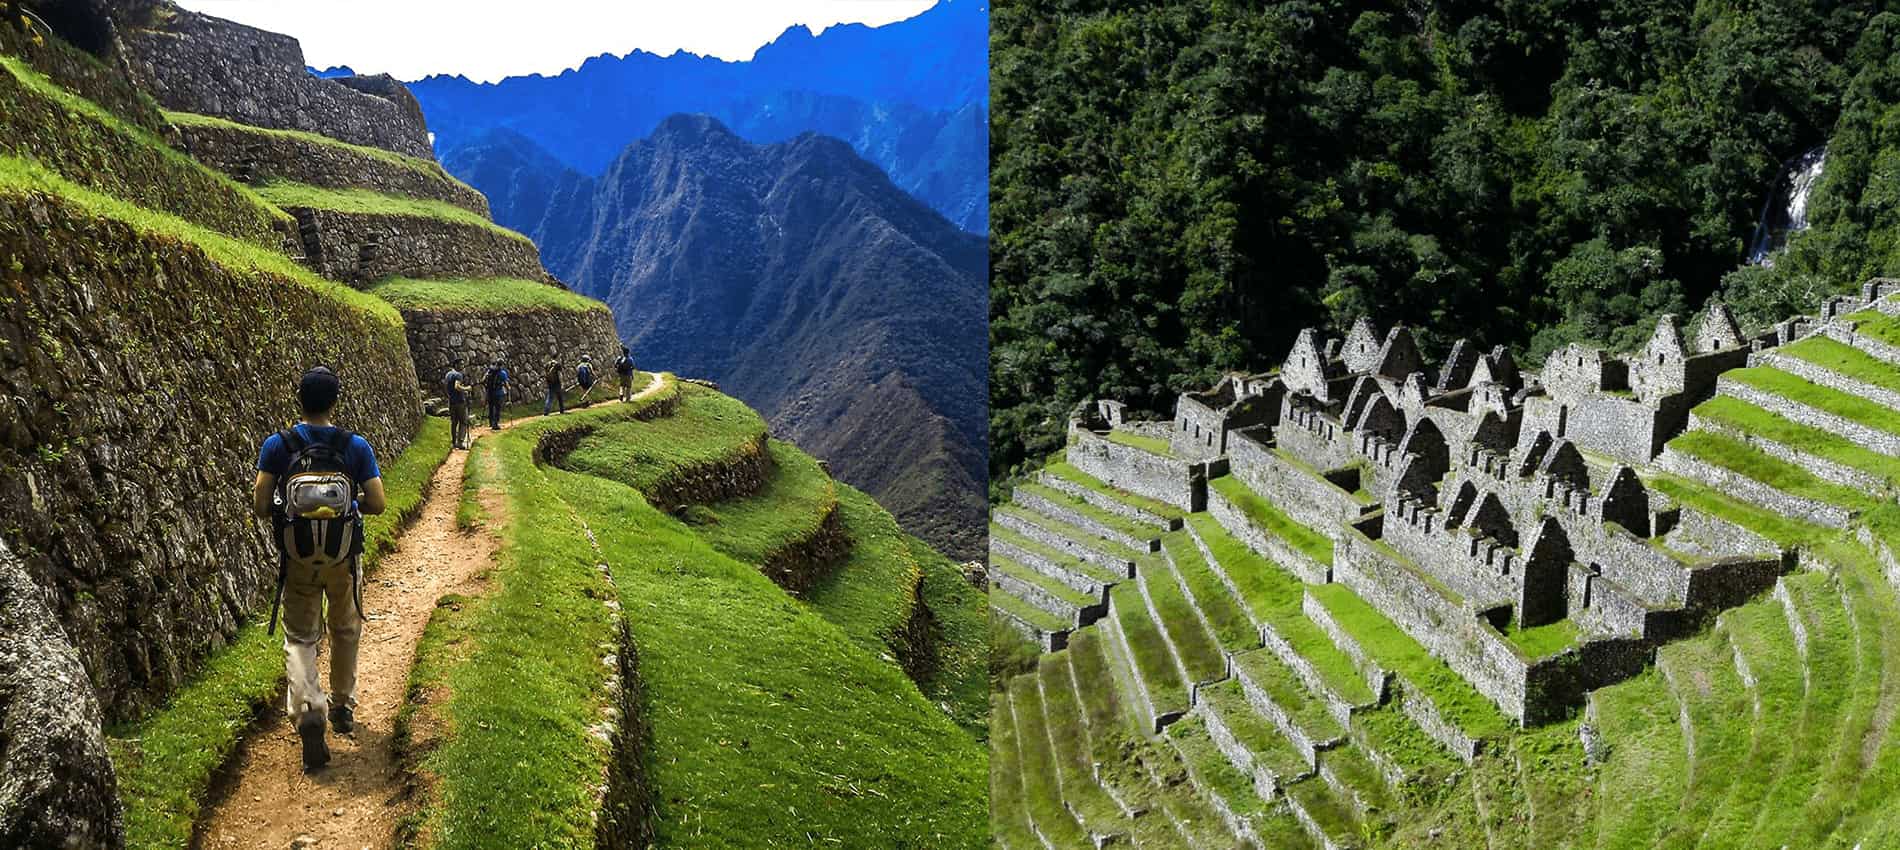 Lares Trek and Short Inca Trail Hike to Machu Picchu 5 Days